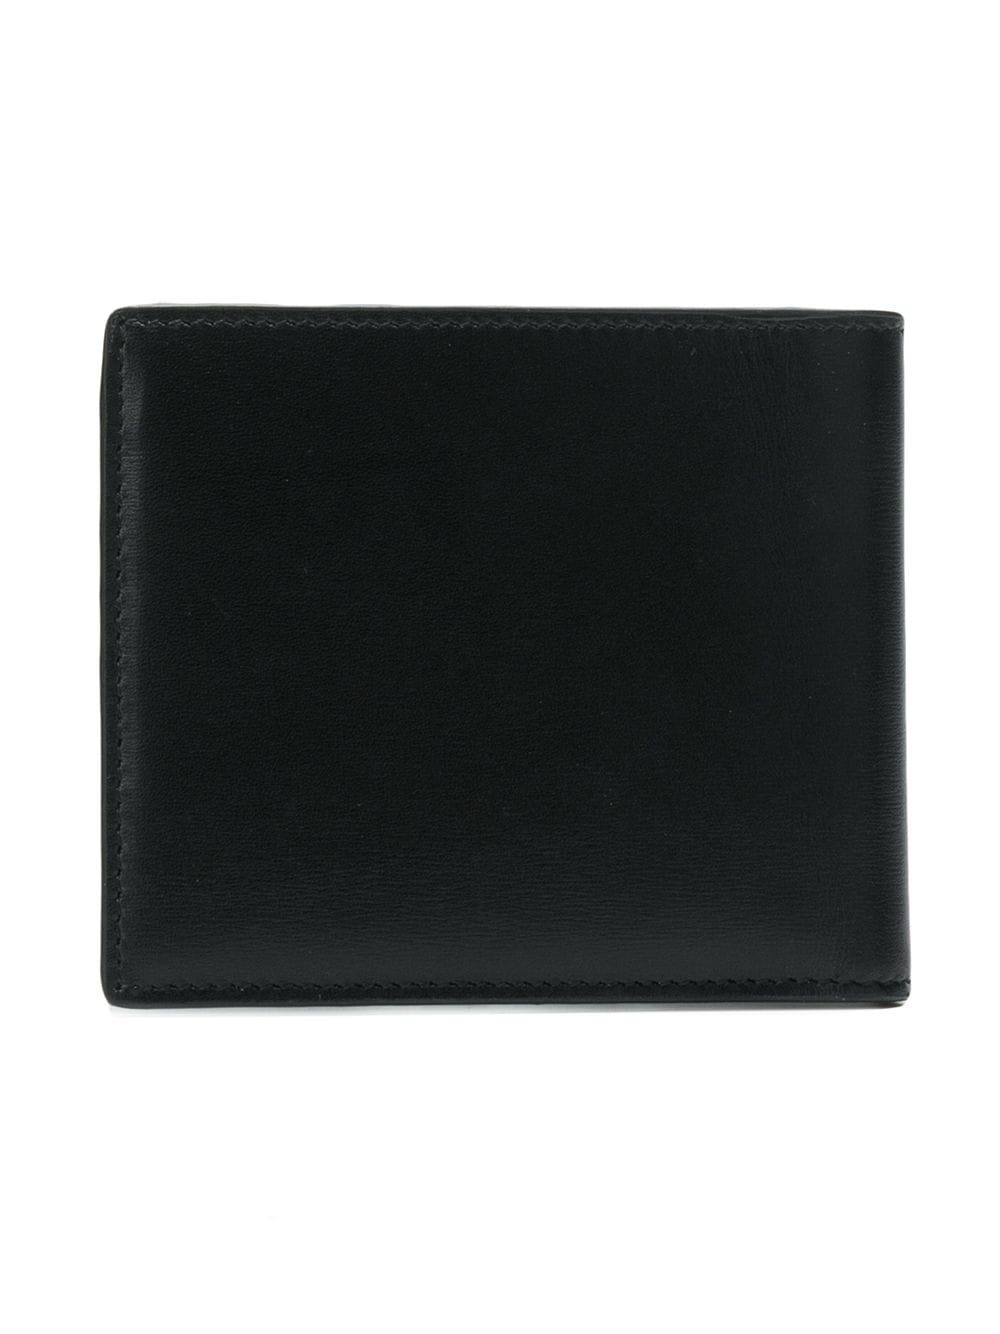 SAINT LAURENT Black Leather Bi-Fold Wallet for Men